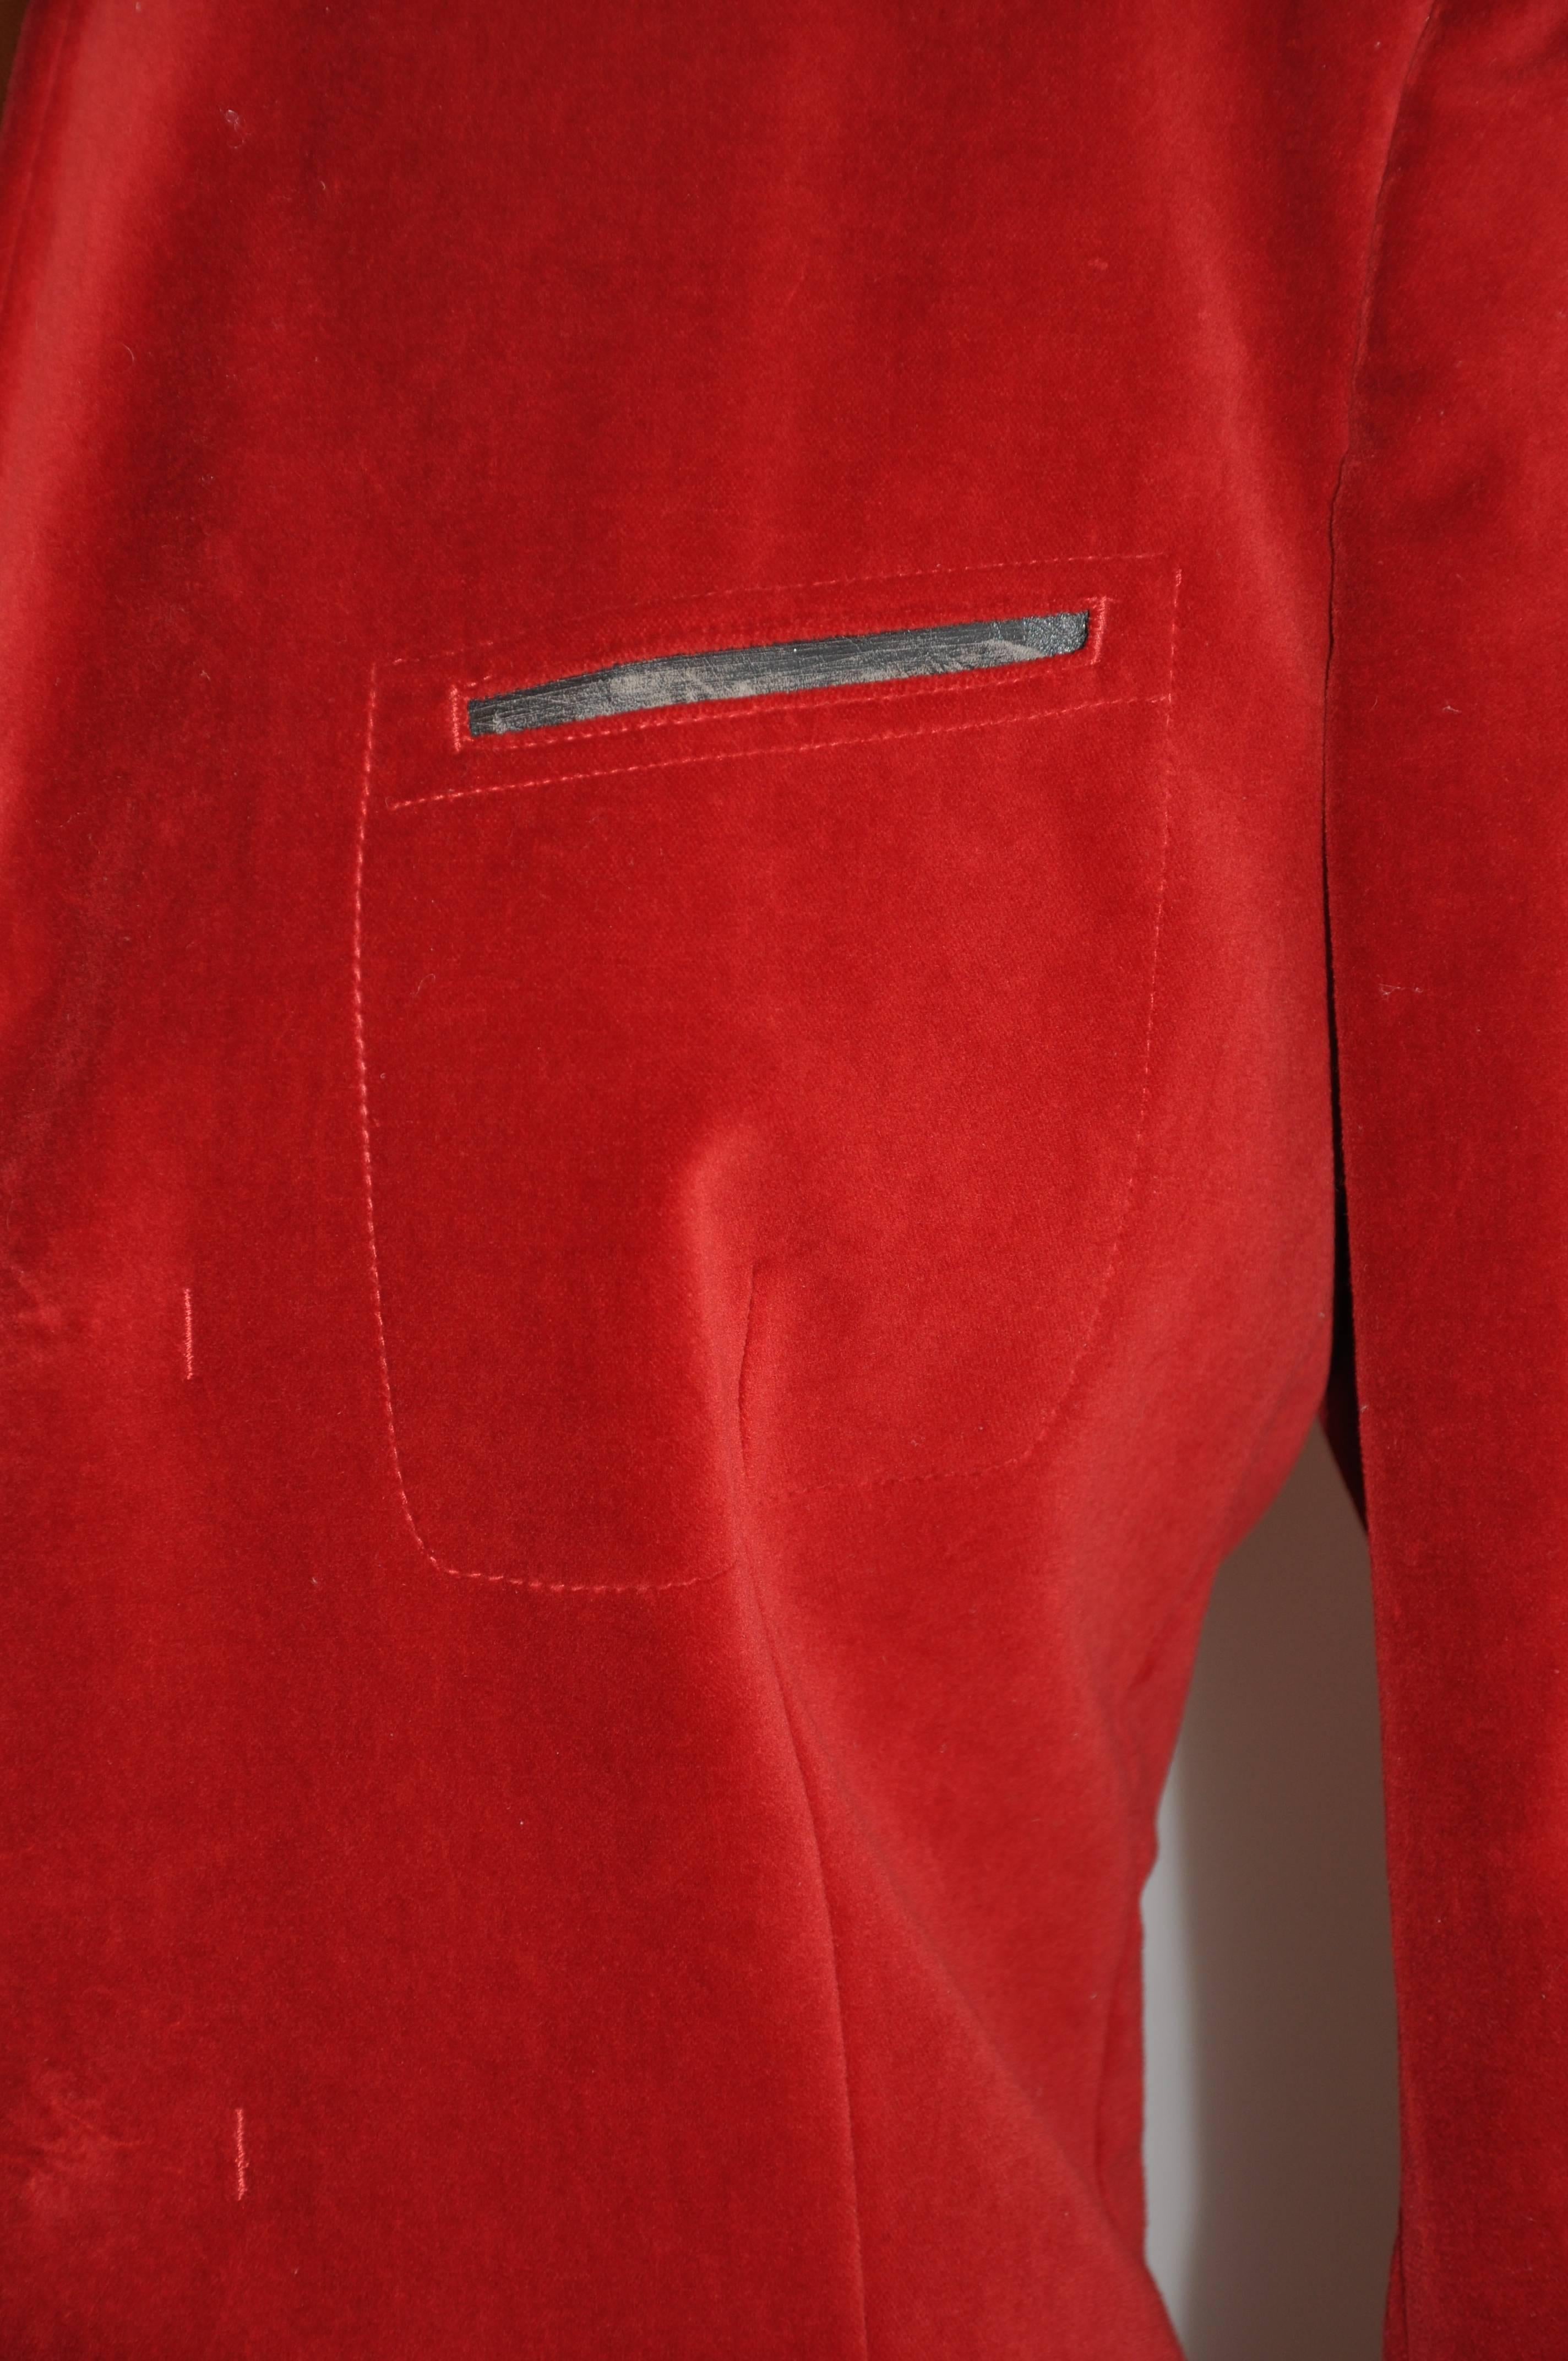 crimson red jacket